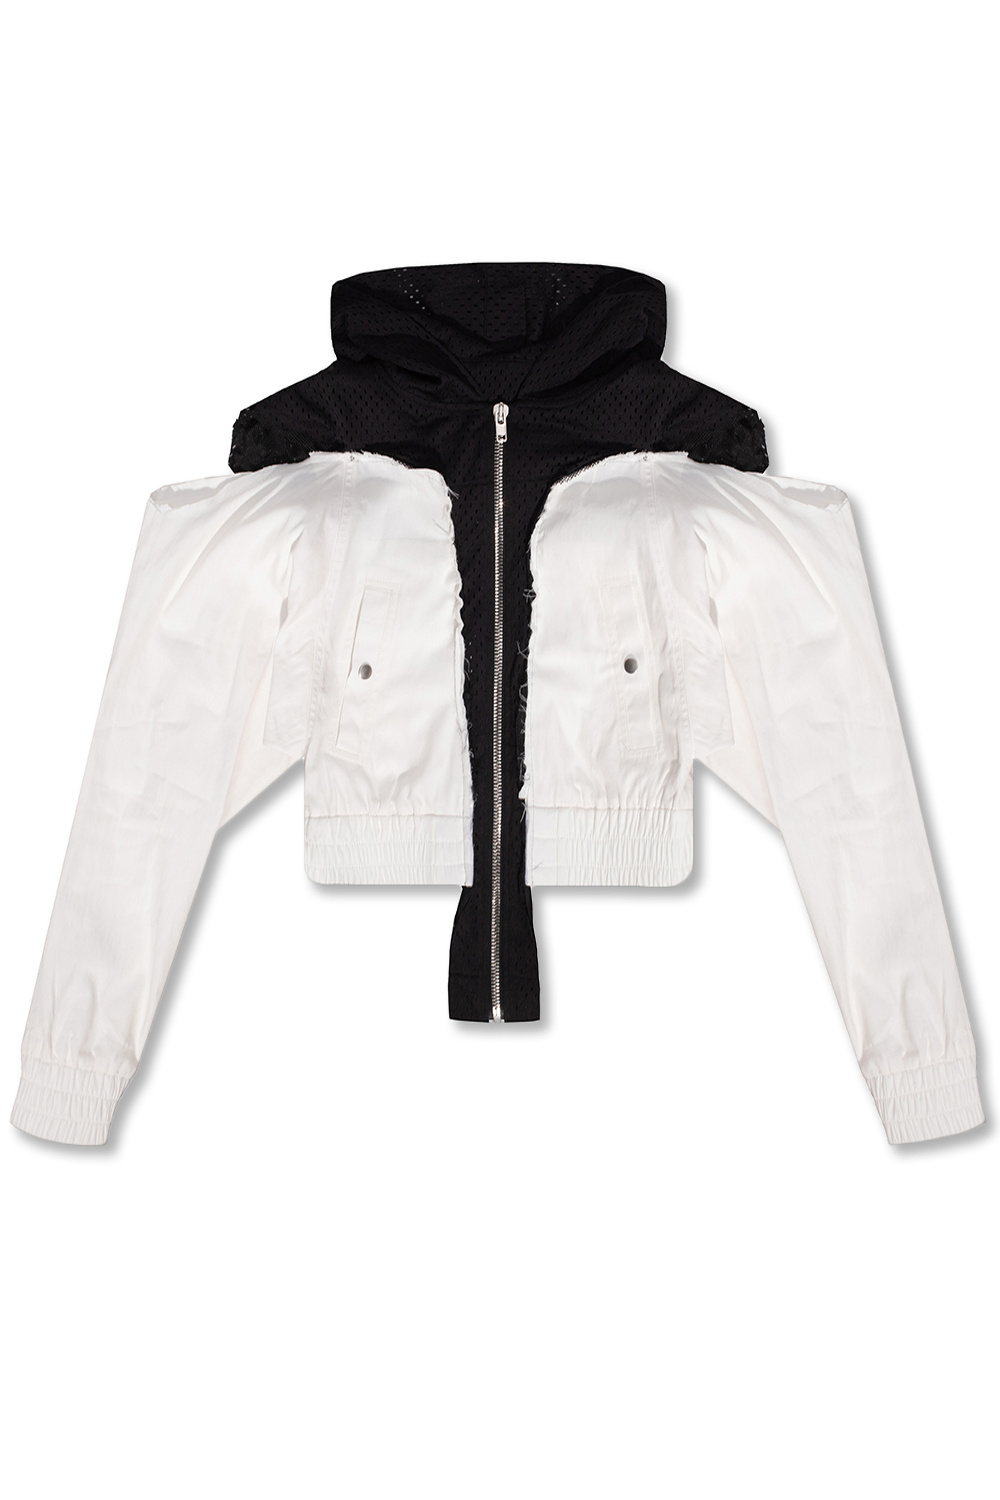 Rick Owens ‘Exclusive for SneakersbeShops’ hooded jacket